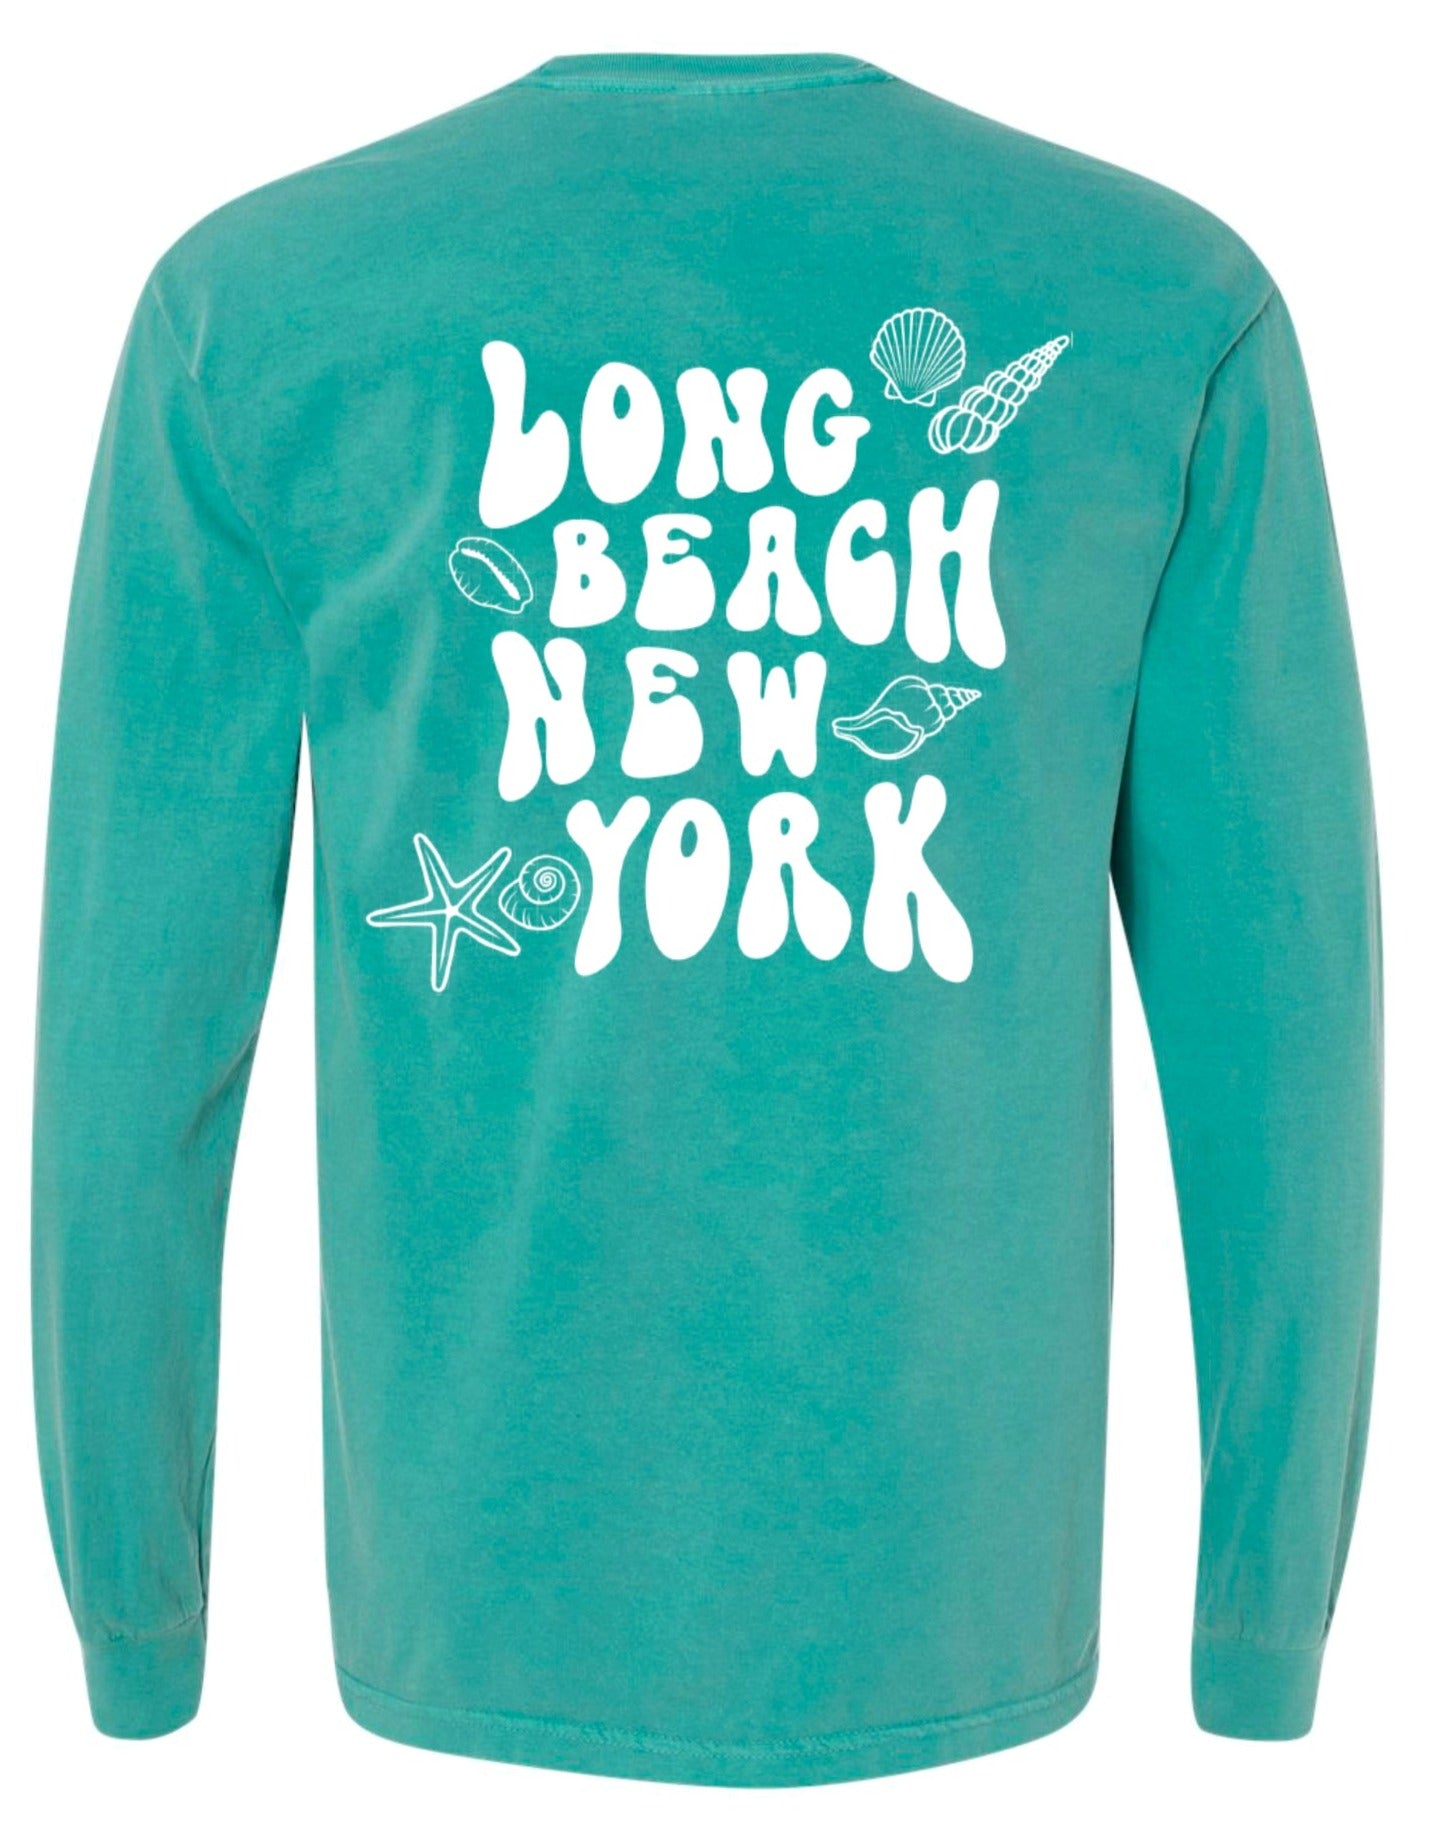 "Long Beach, New York” Long Sleeve